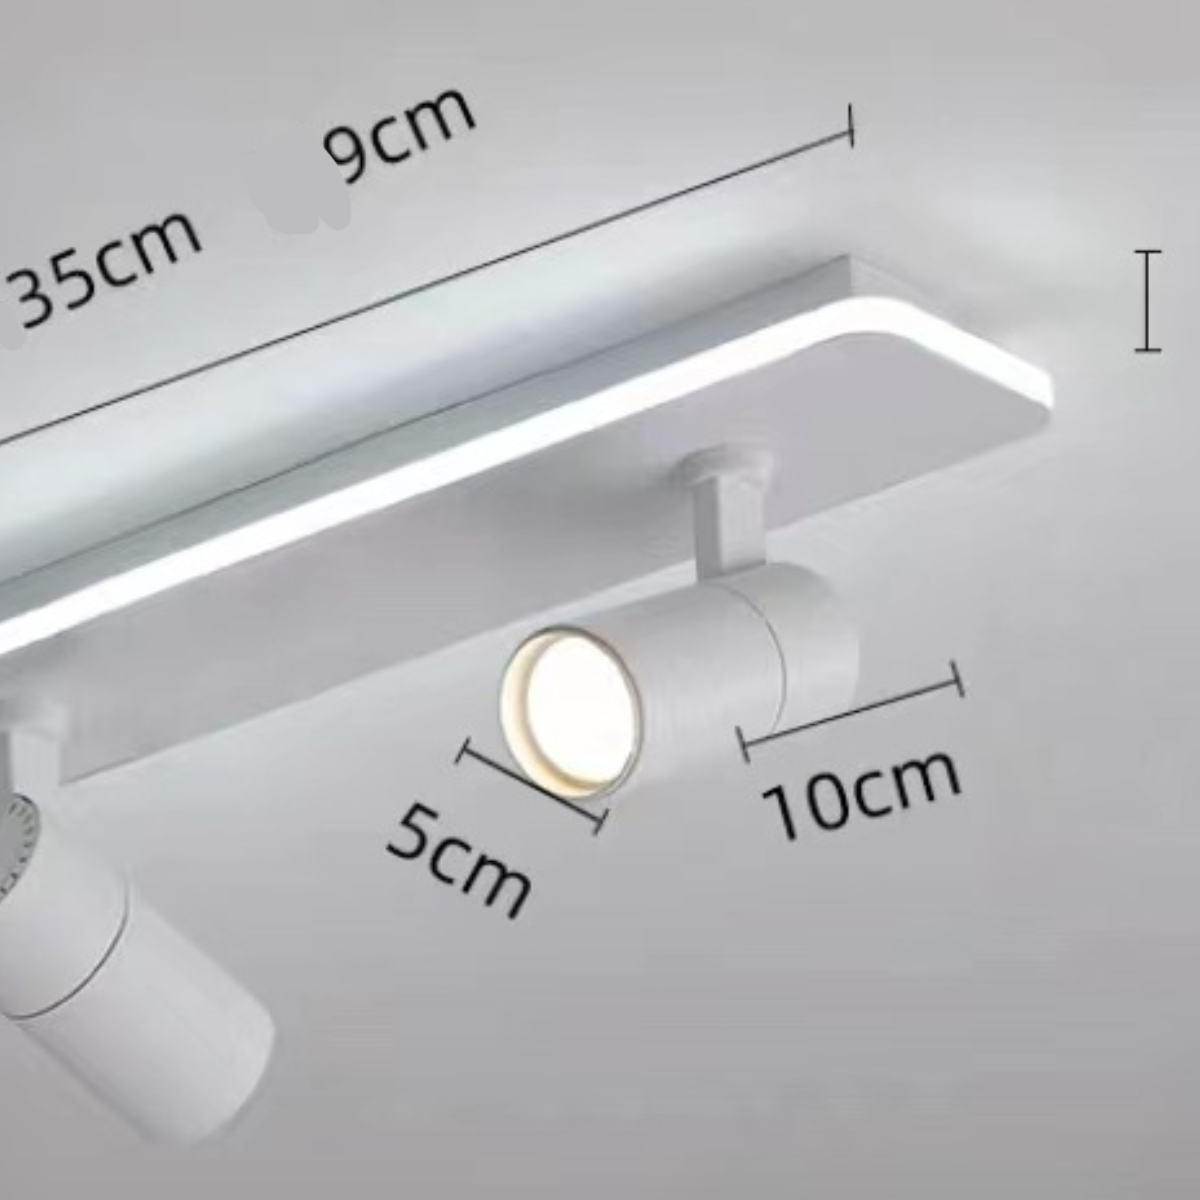 LED-Lampe beleuchten UWOT mehrfarbig Leuchten Dreifarbige LED-Schienenstrahler: perfekt Innenkorridore